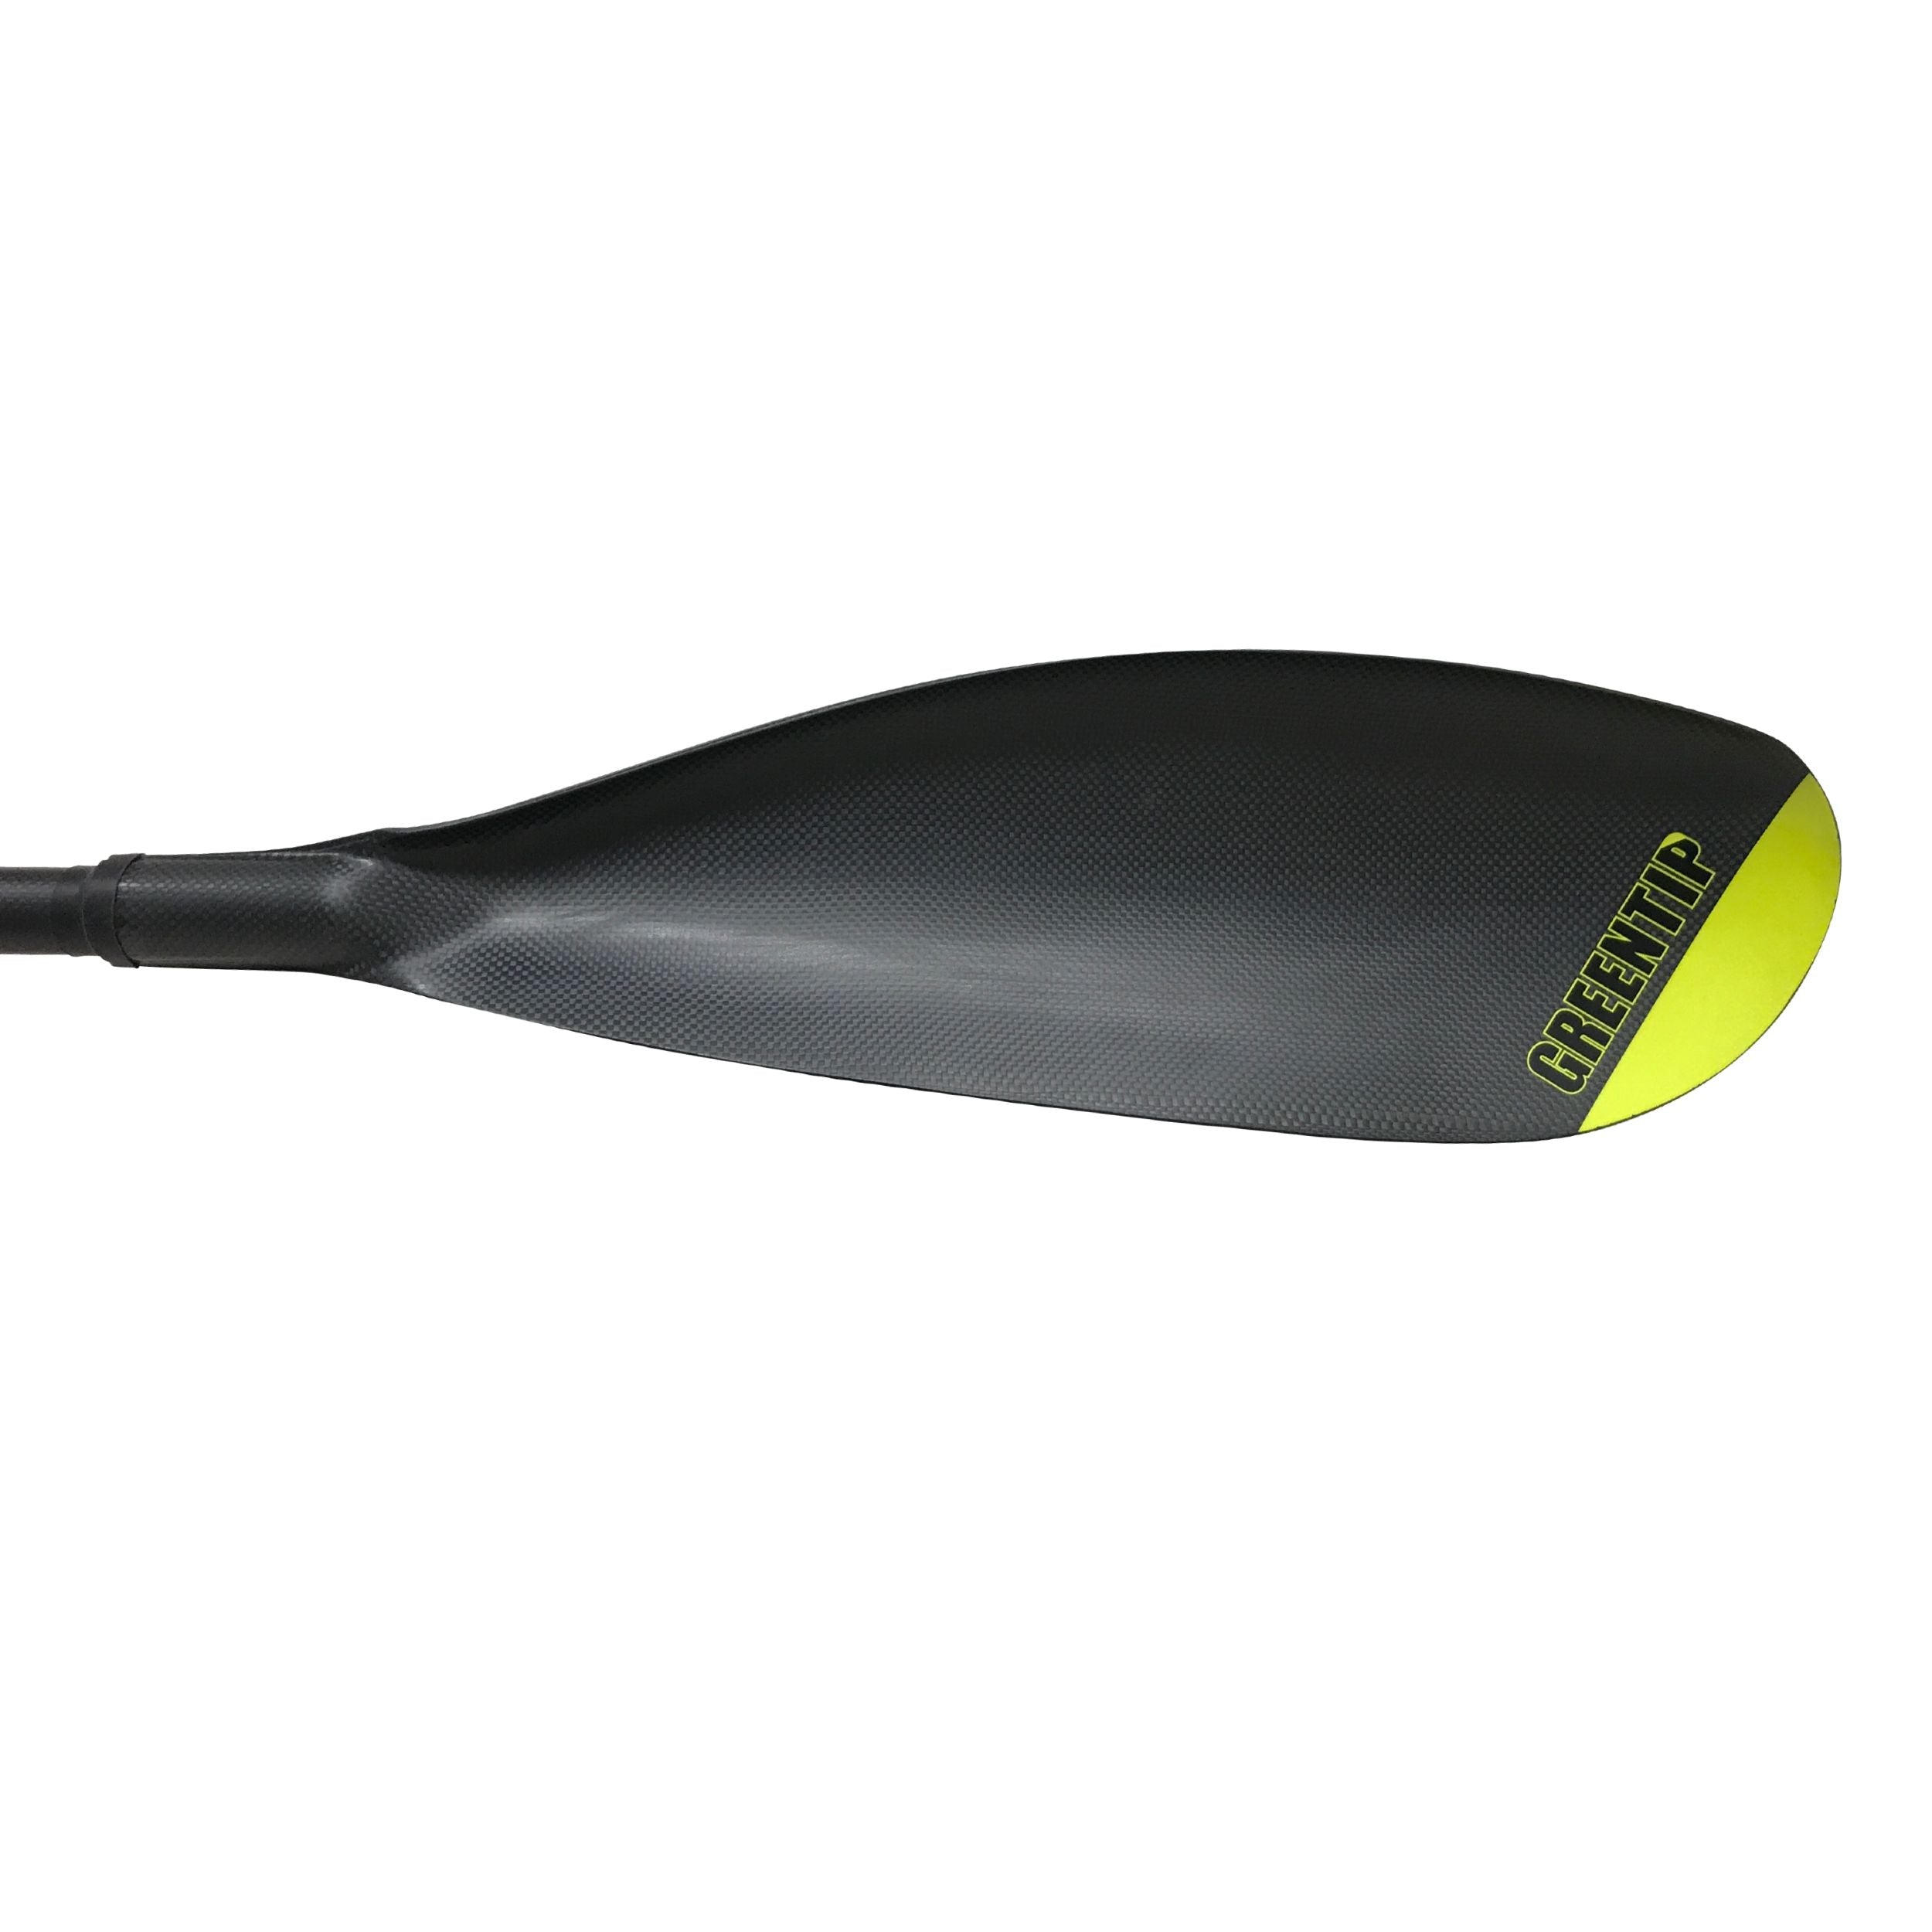 Greentip Raw Wing Profile Paddle